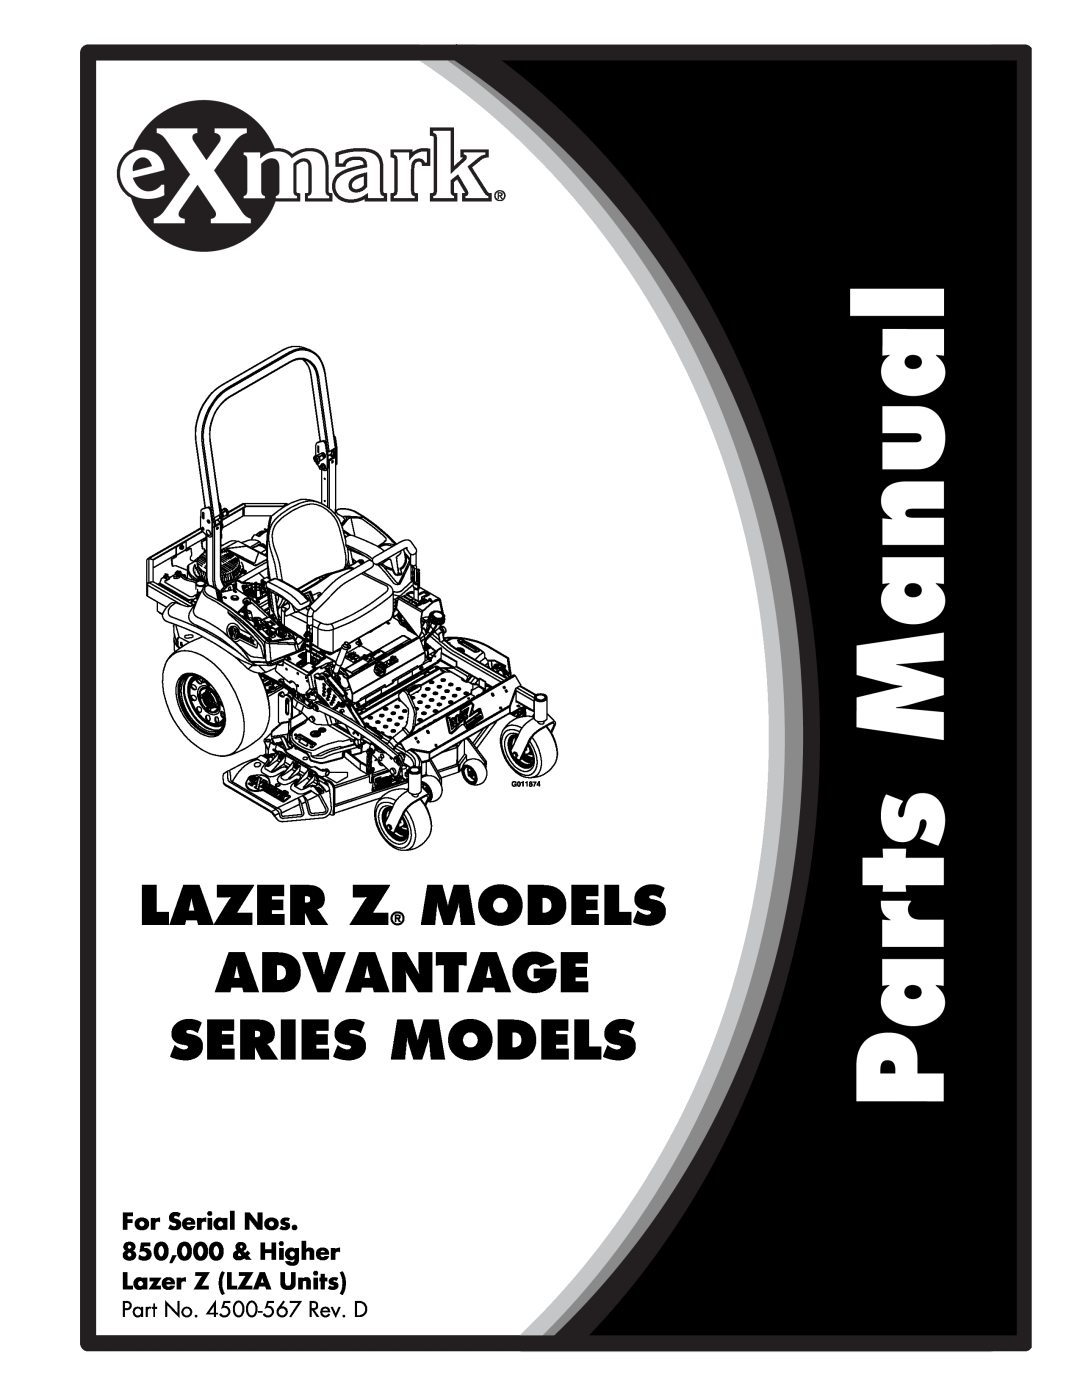 Exmark LZ27KC605, RT11425 manual Lazer Z Models Advantage Series Models, For Serial Nos 850,000 & Higher Lazer Z LZA Units 